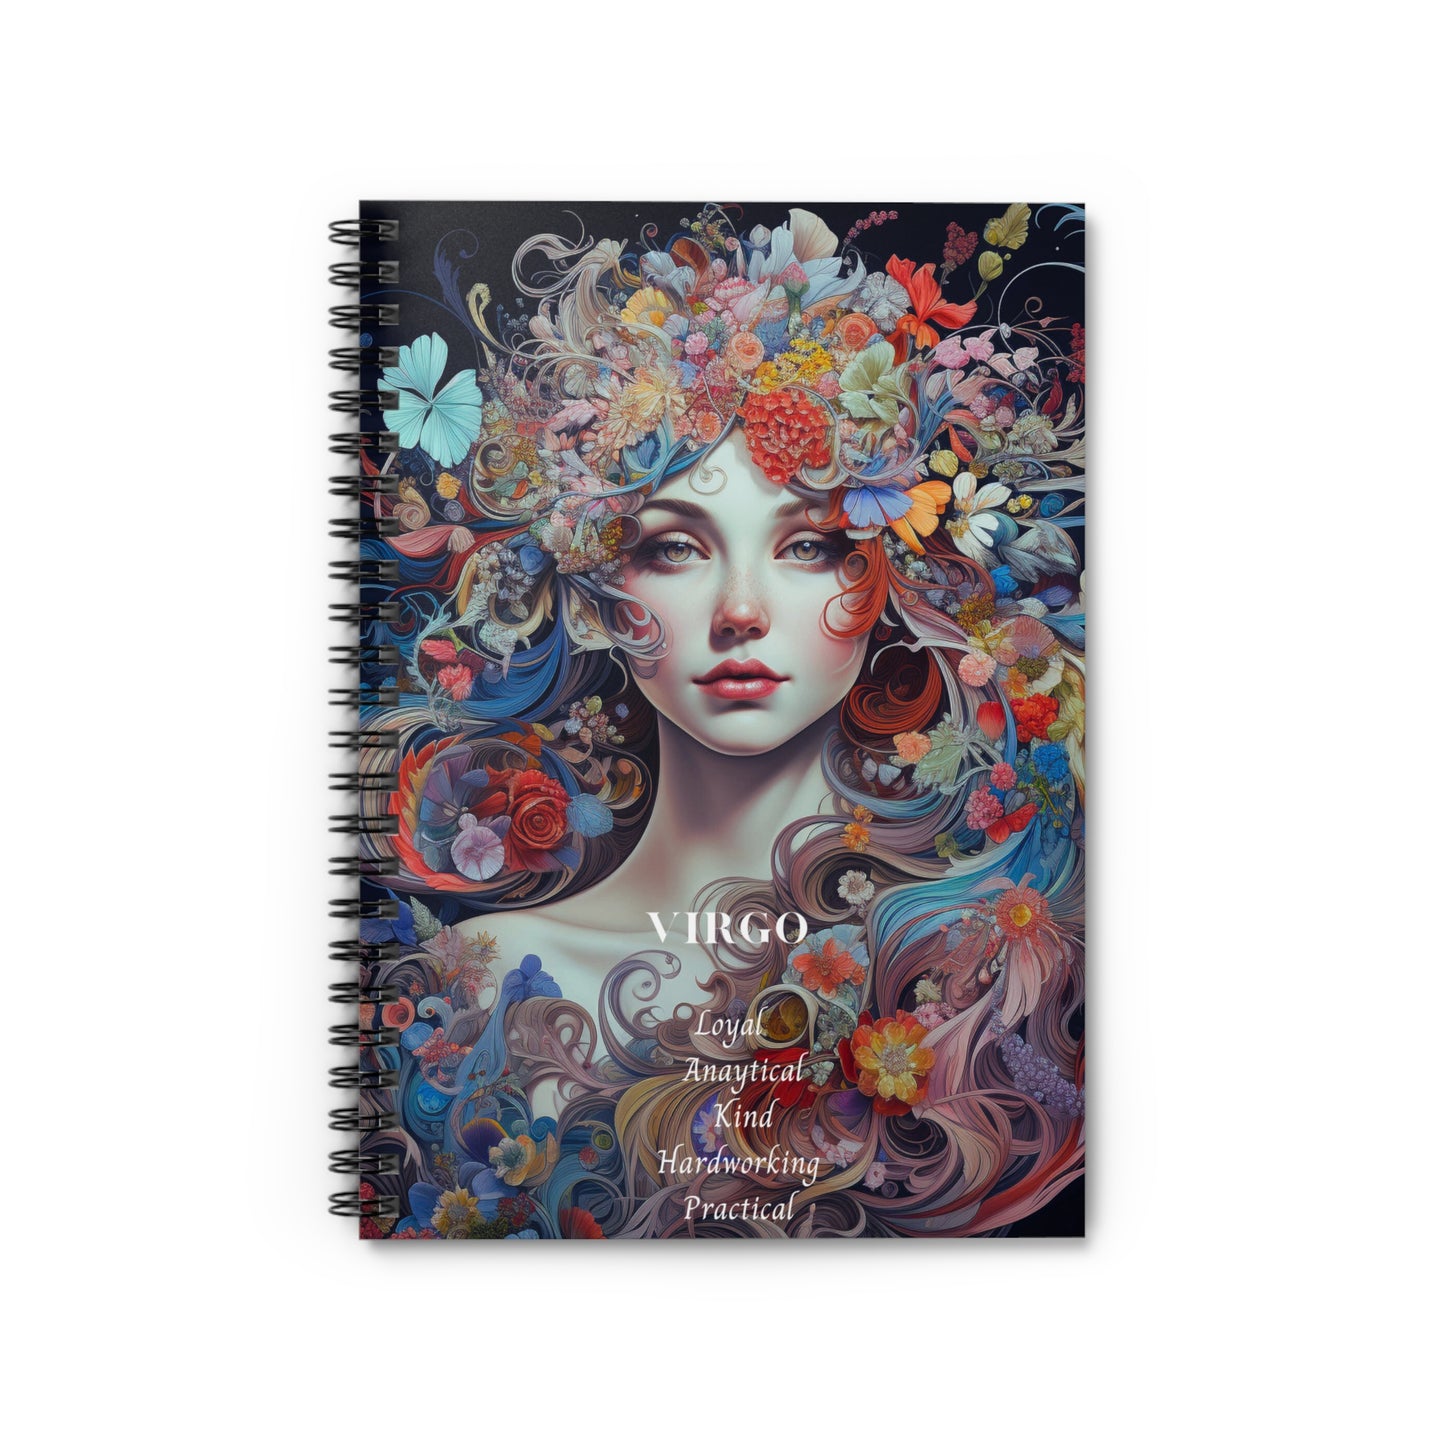 Girl with flowers in hair, Virgo Zodiac Traits | Original Art | Spiral Notebook - Ruled Line